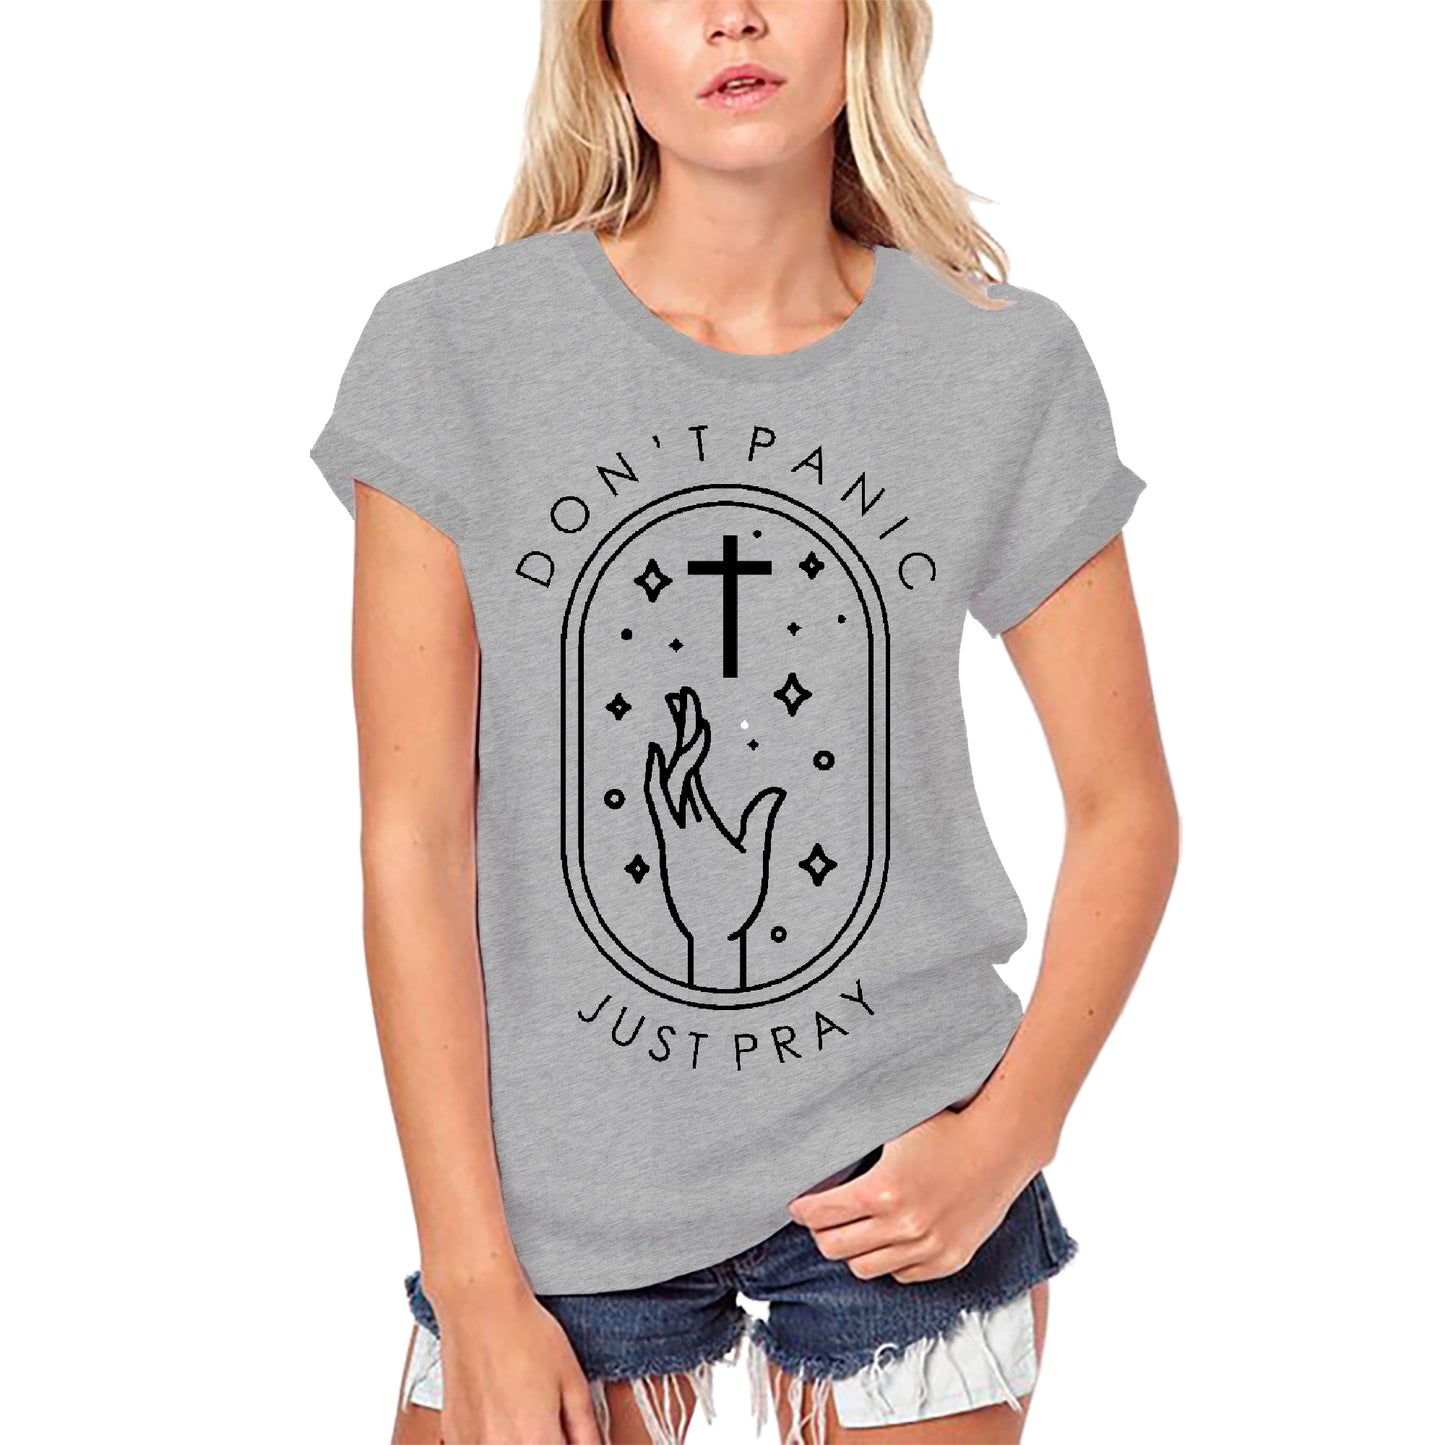 ULTRABASIC Women's Organic T-Shirt Don't Panic Just Pray - Religious Shirt